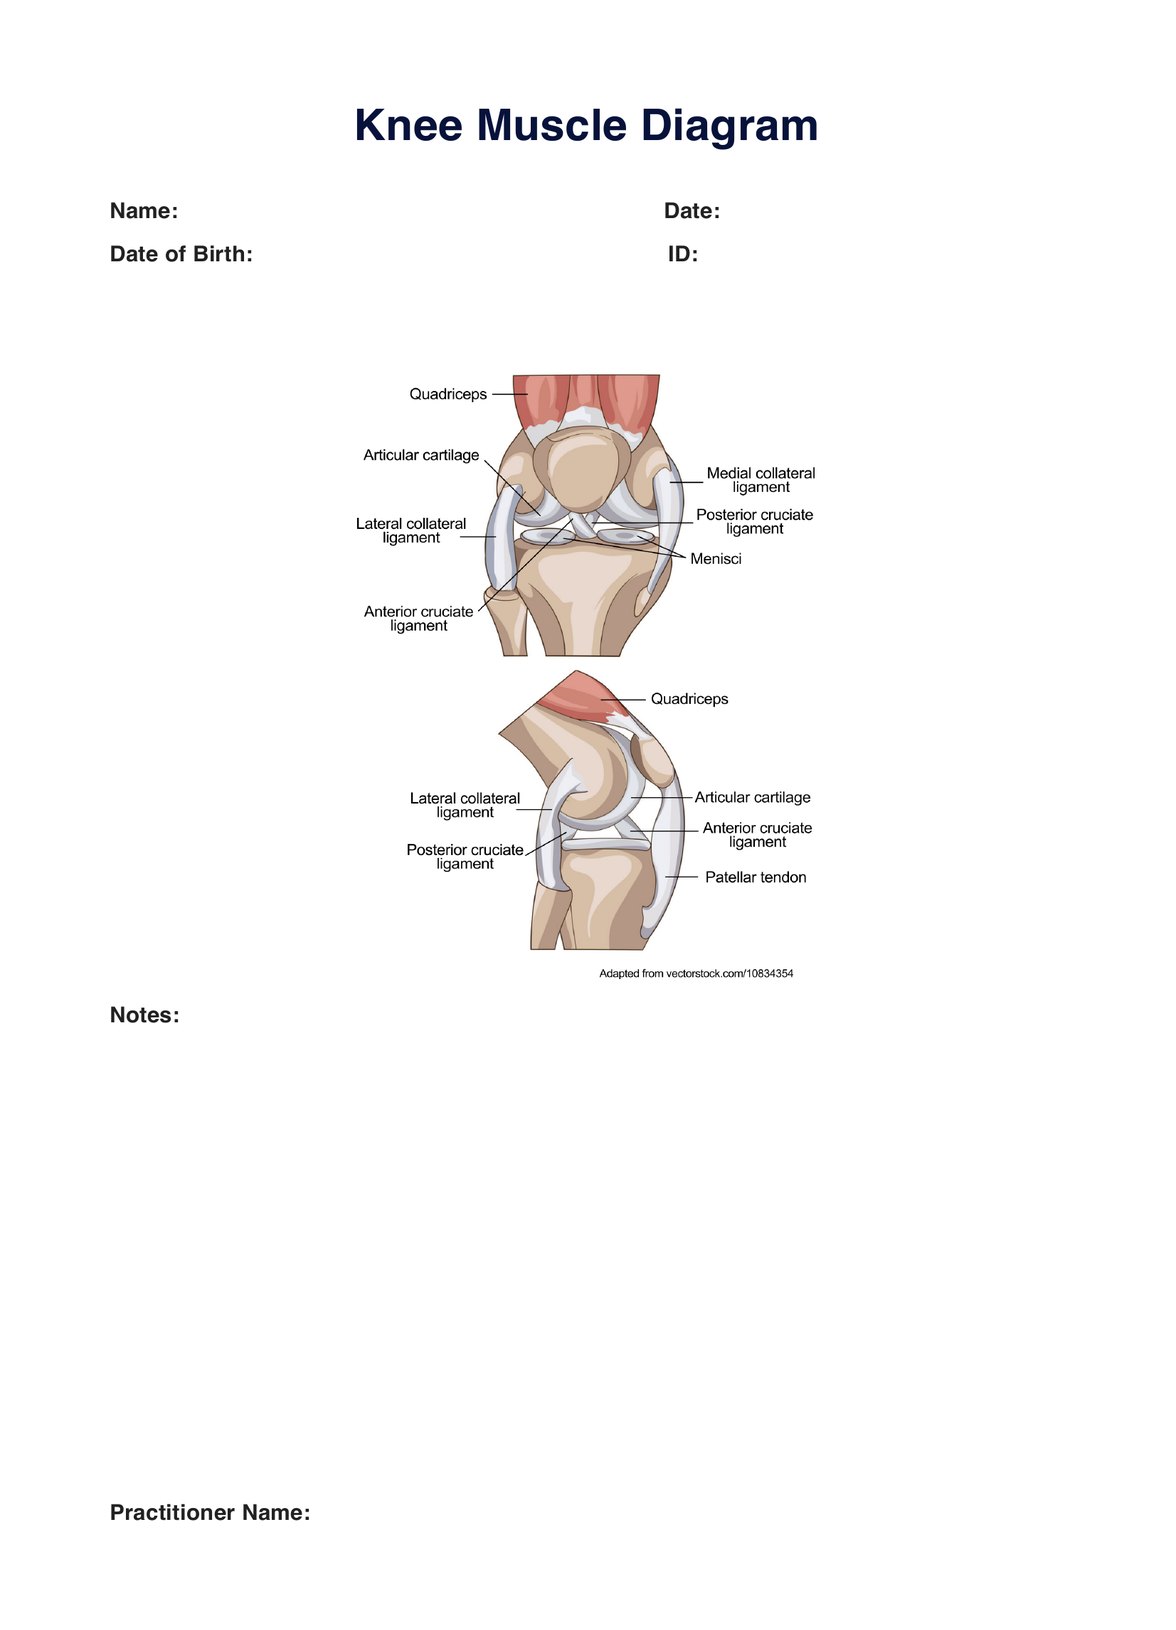 Knee Muscle Diagram PDF Example